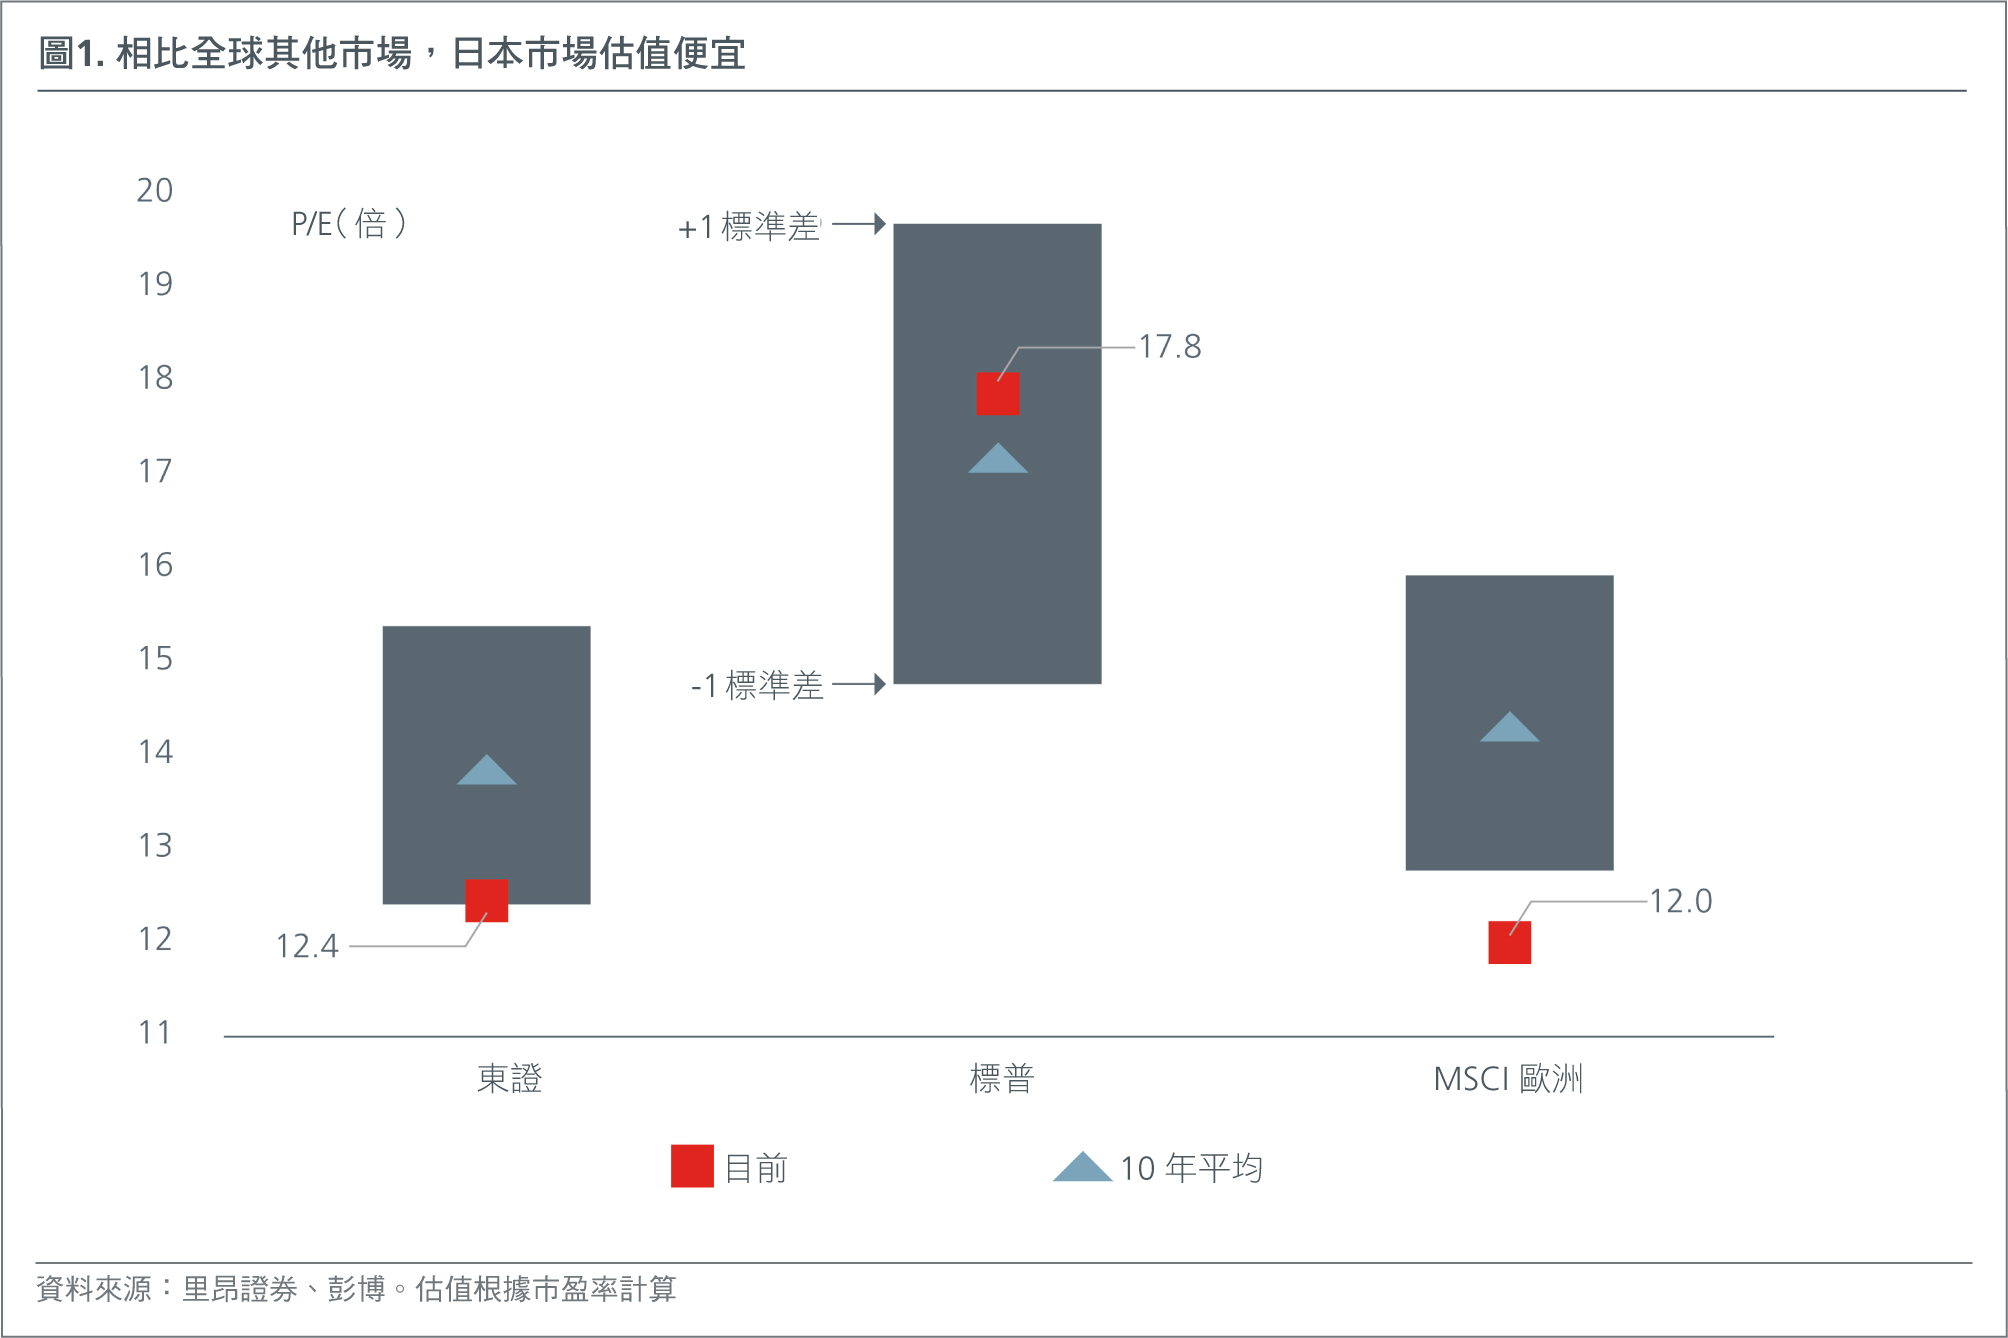 HK-CN-japans-good-value-creates-alpha-opportunities-Fig1